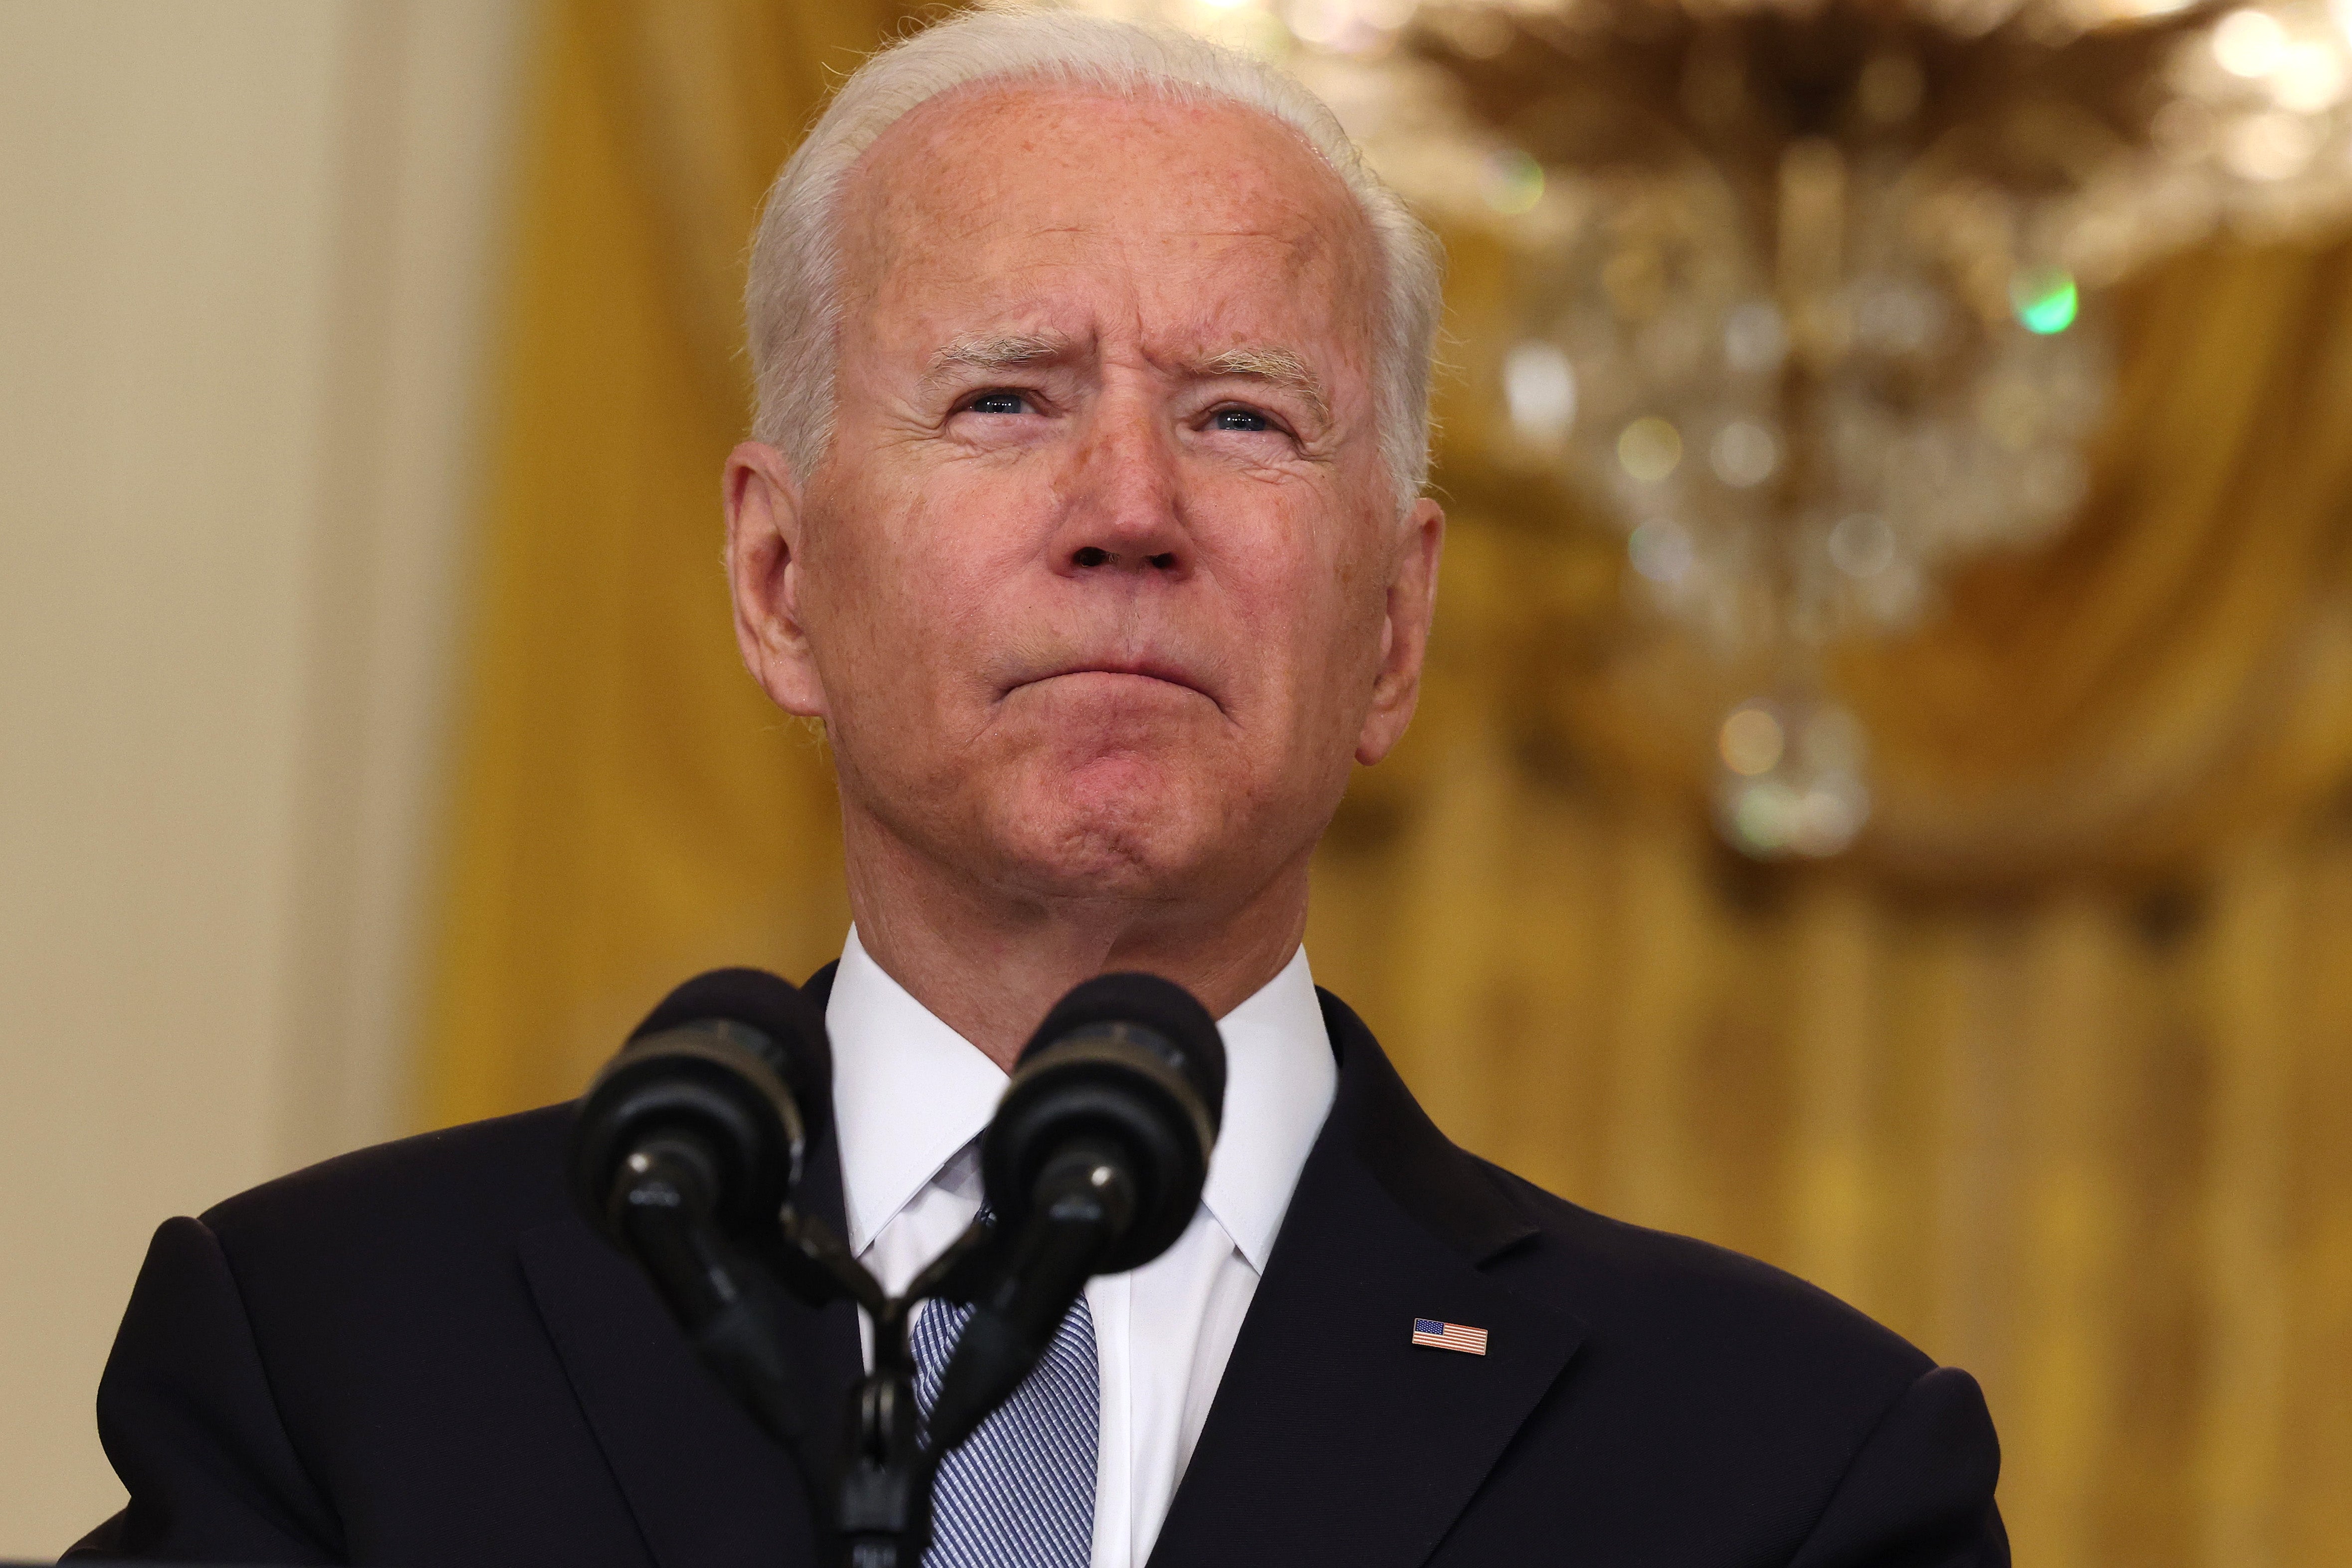 File: Joe Biden’s administration will not extend a $300 unemployment benefit boost to citizens again